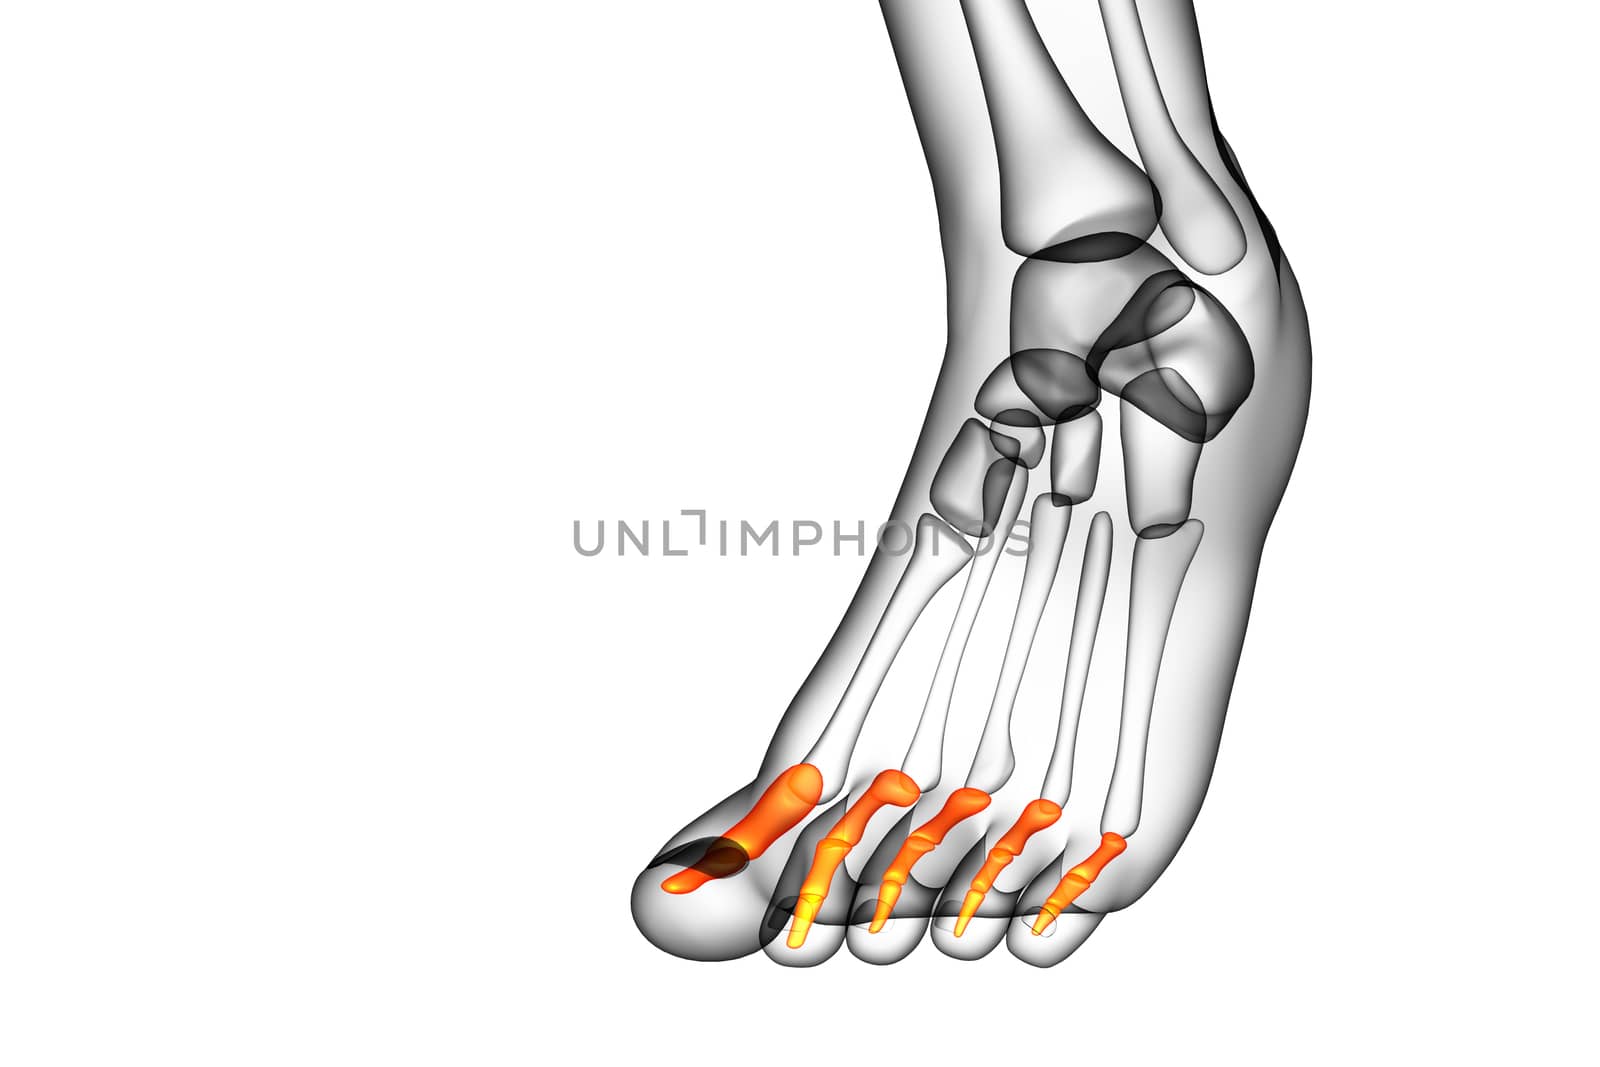 3d render medical illustration of the phalanges foot - front view